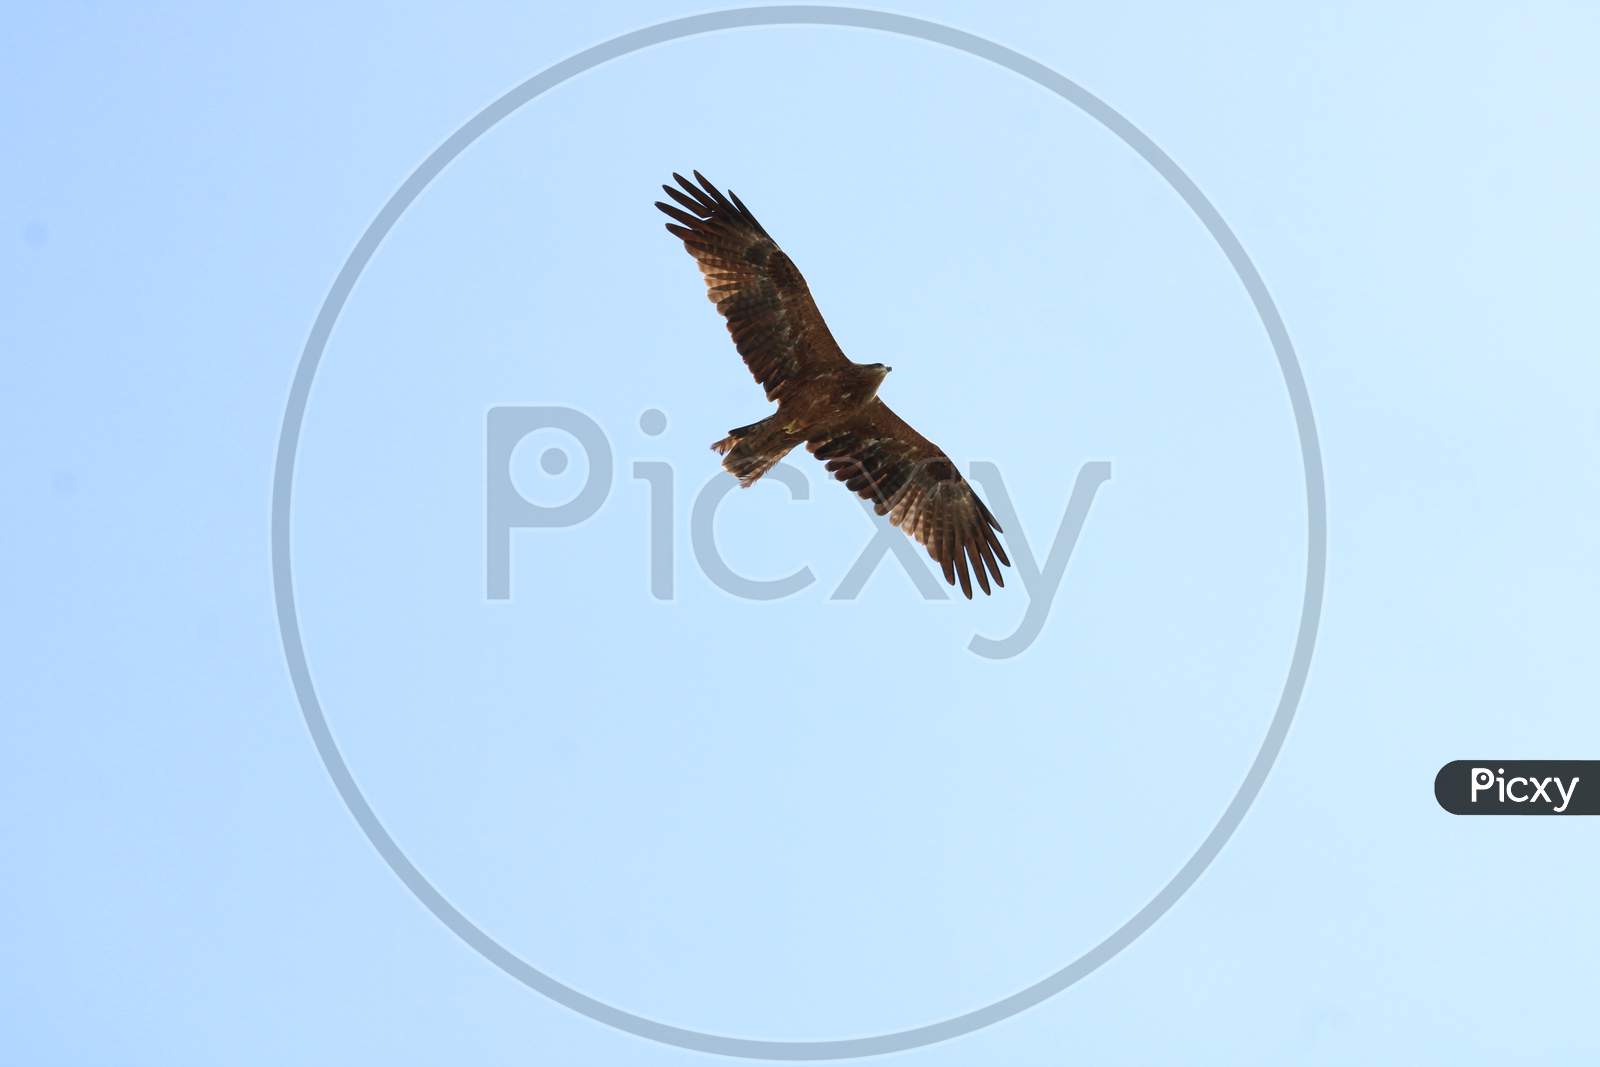 Eagle bir flying high in sky. Good background for teams message. Seasonal greetings.